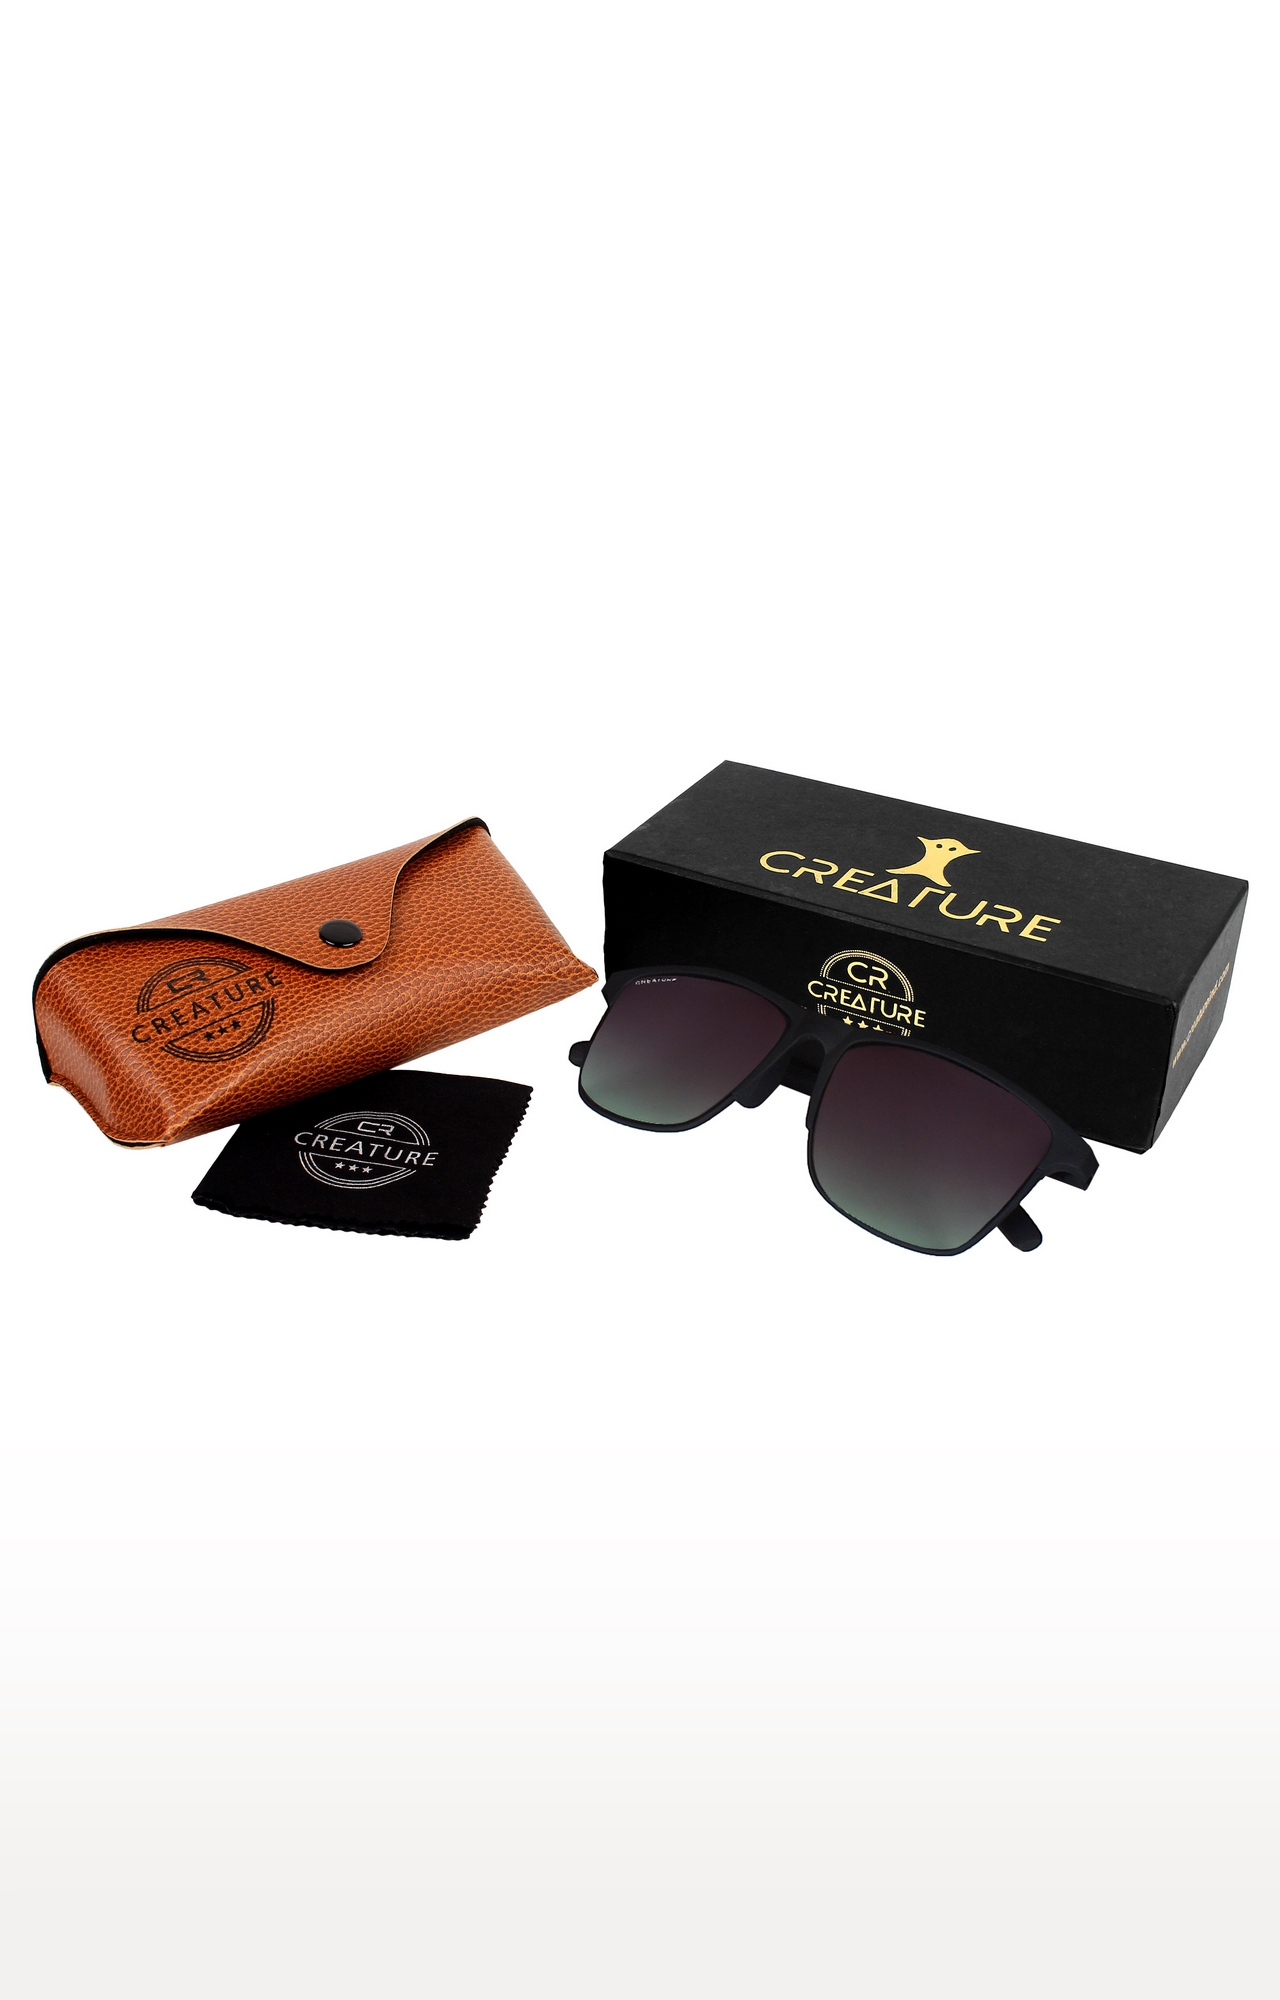 CREATURE | CREATURE Black Sunglasses with UV Protection (Lens-Black|Frame-Black) 5